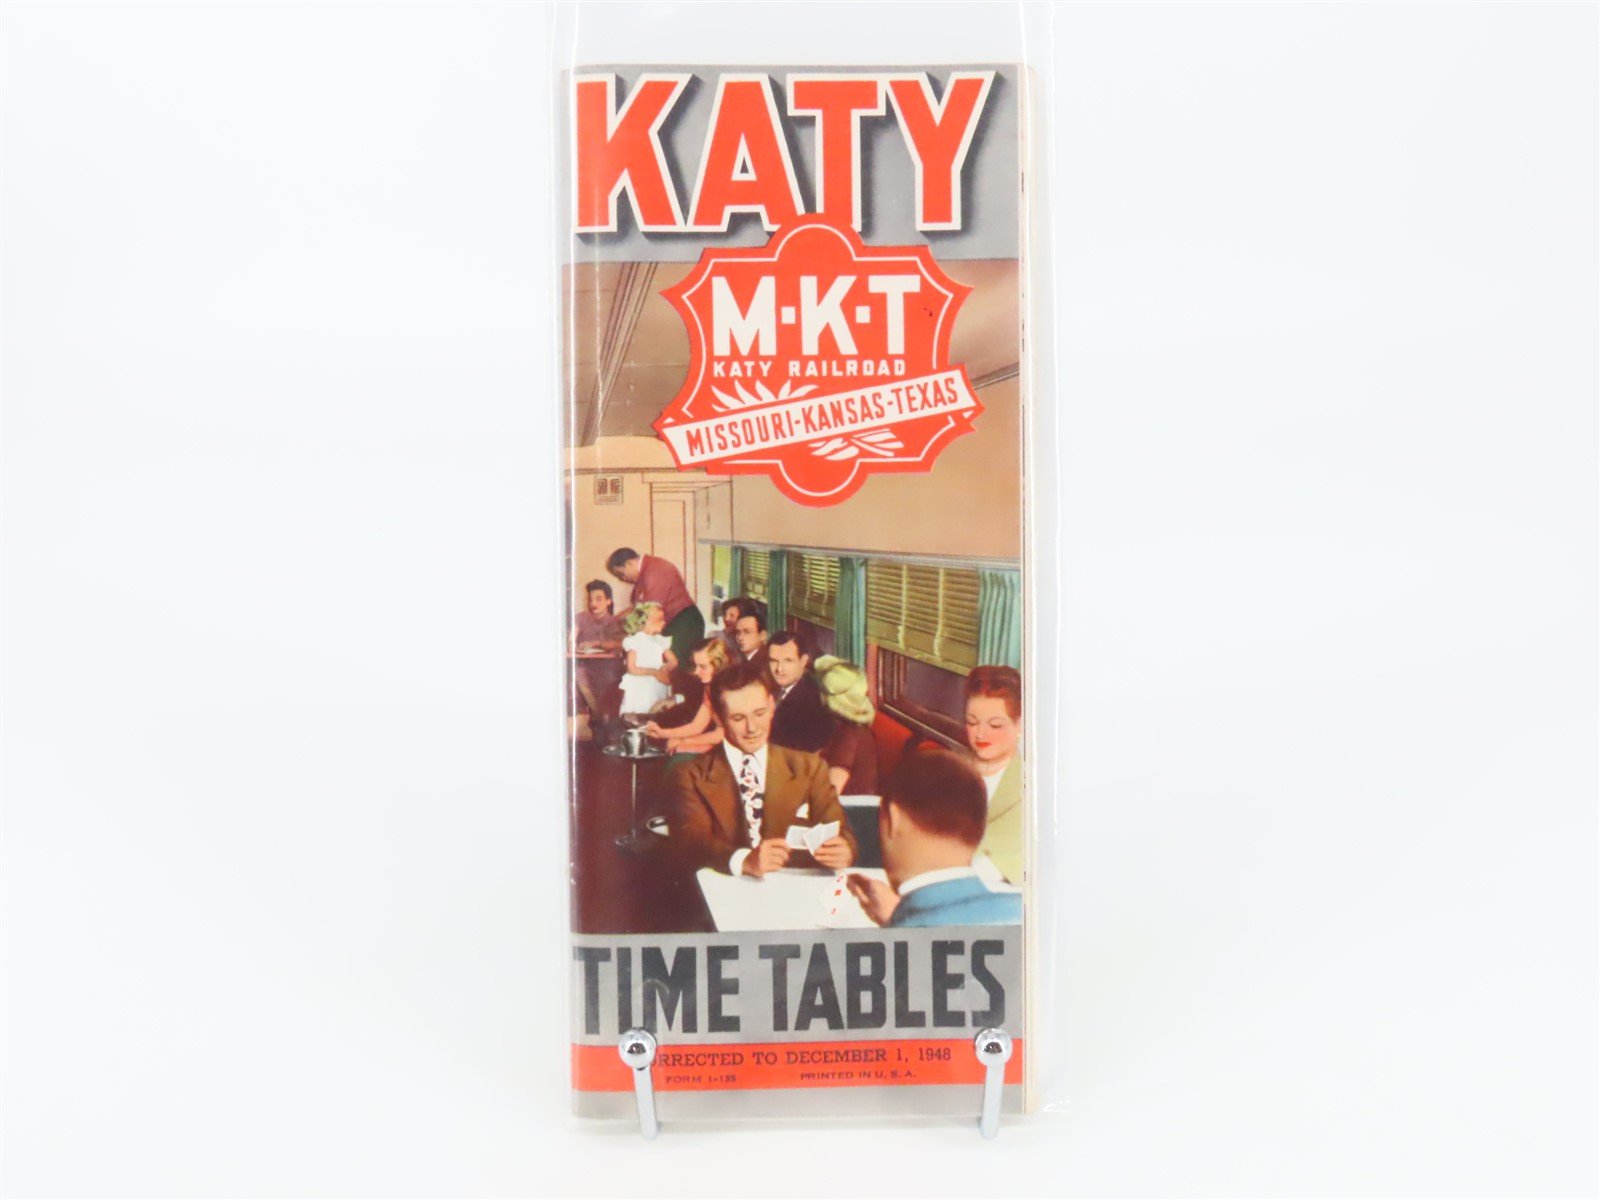 MKT Missouri Kansas Texas Katy Railroad Time Tables - December 1, 1948